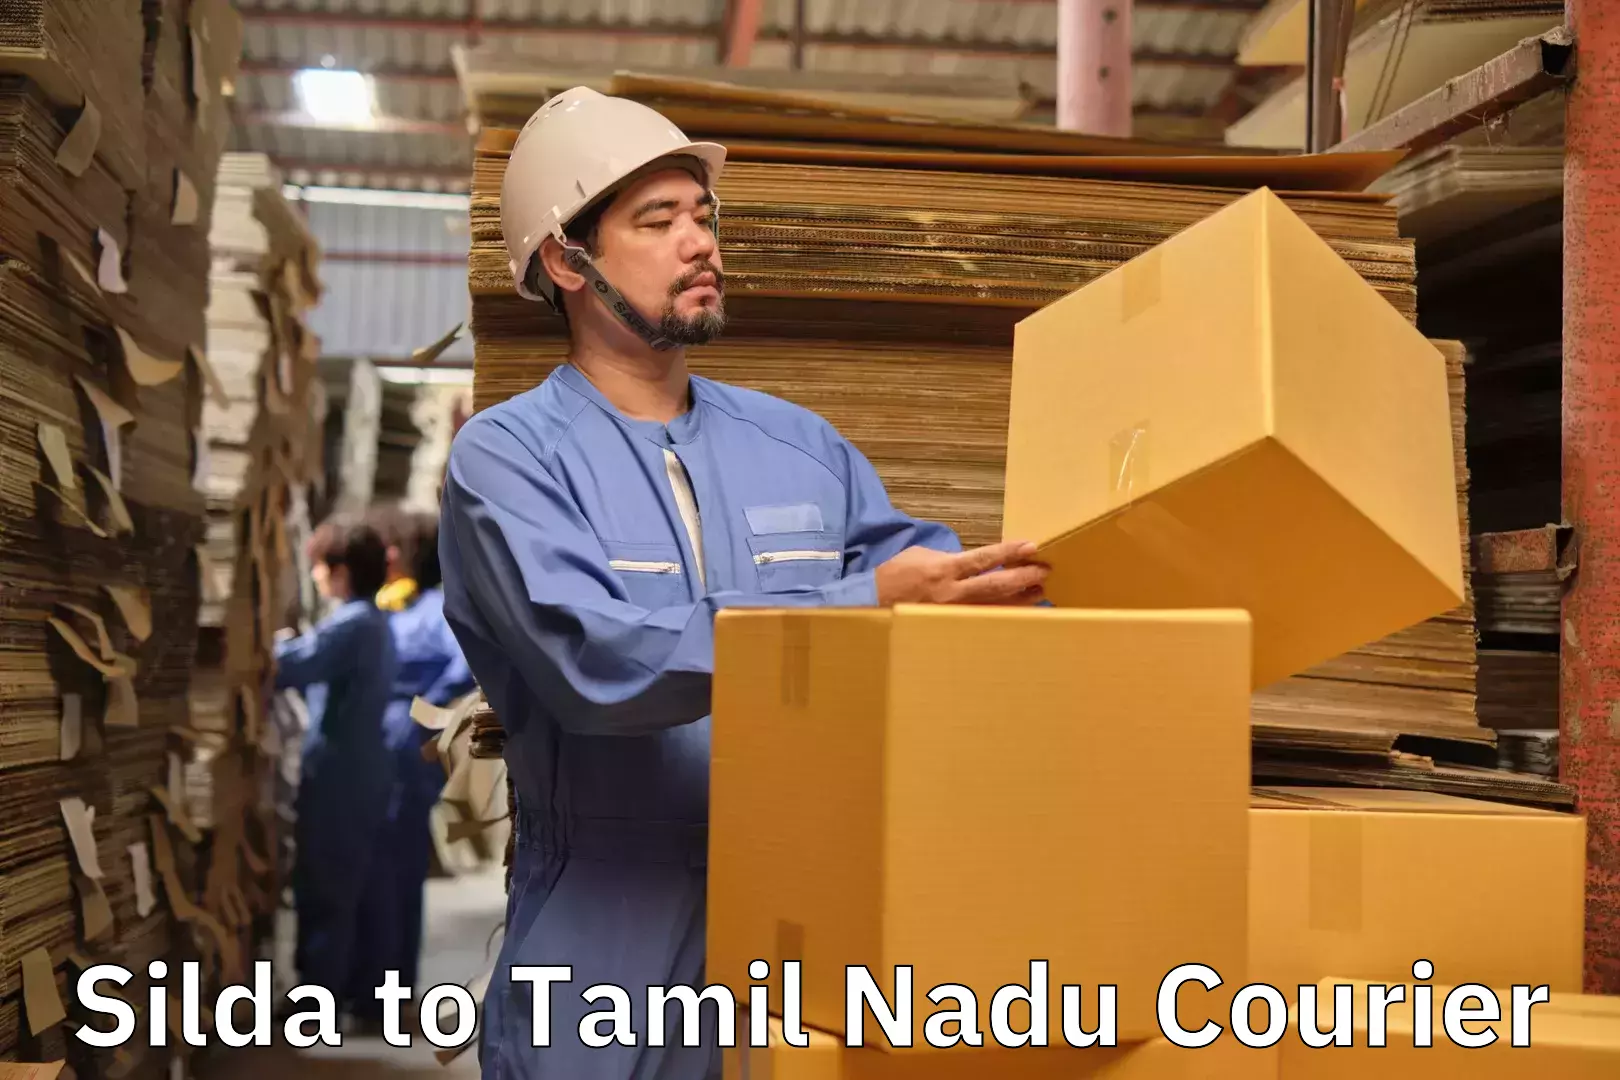 Luggage shipping specialists Silda to Tamil Nadu